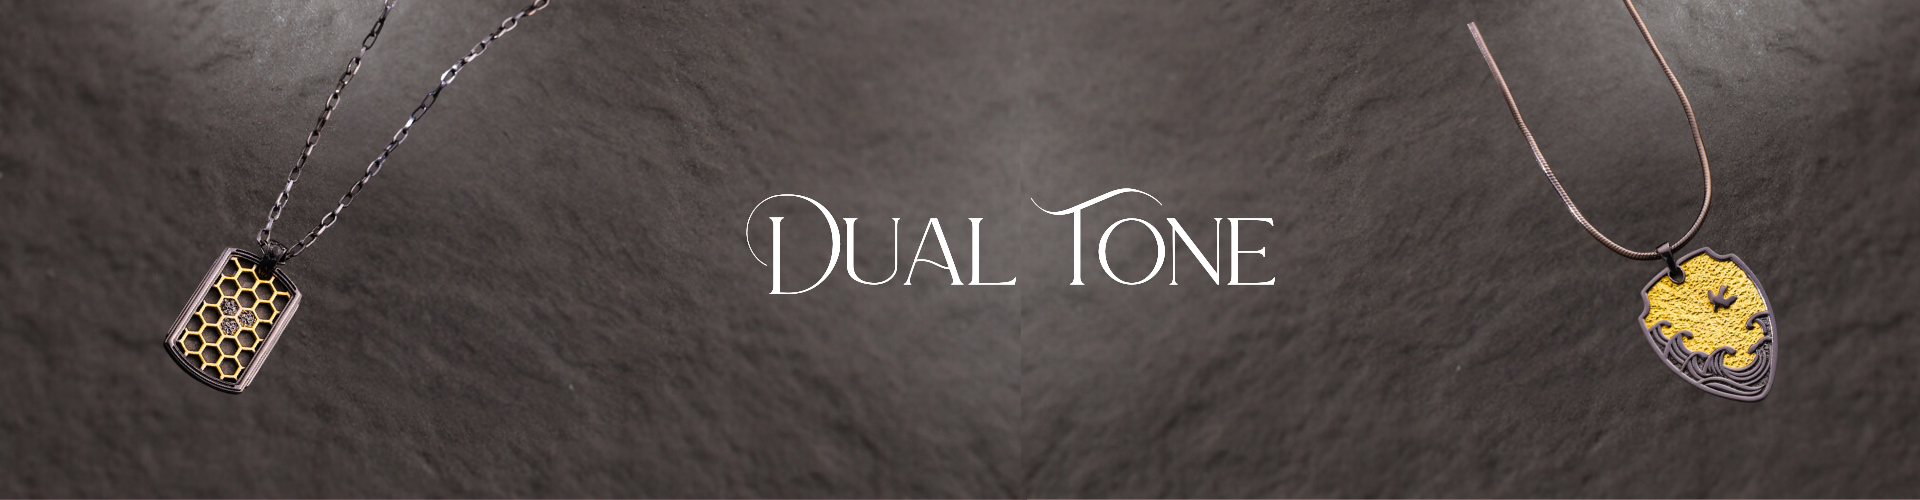 dual tone silver jewellery